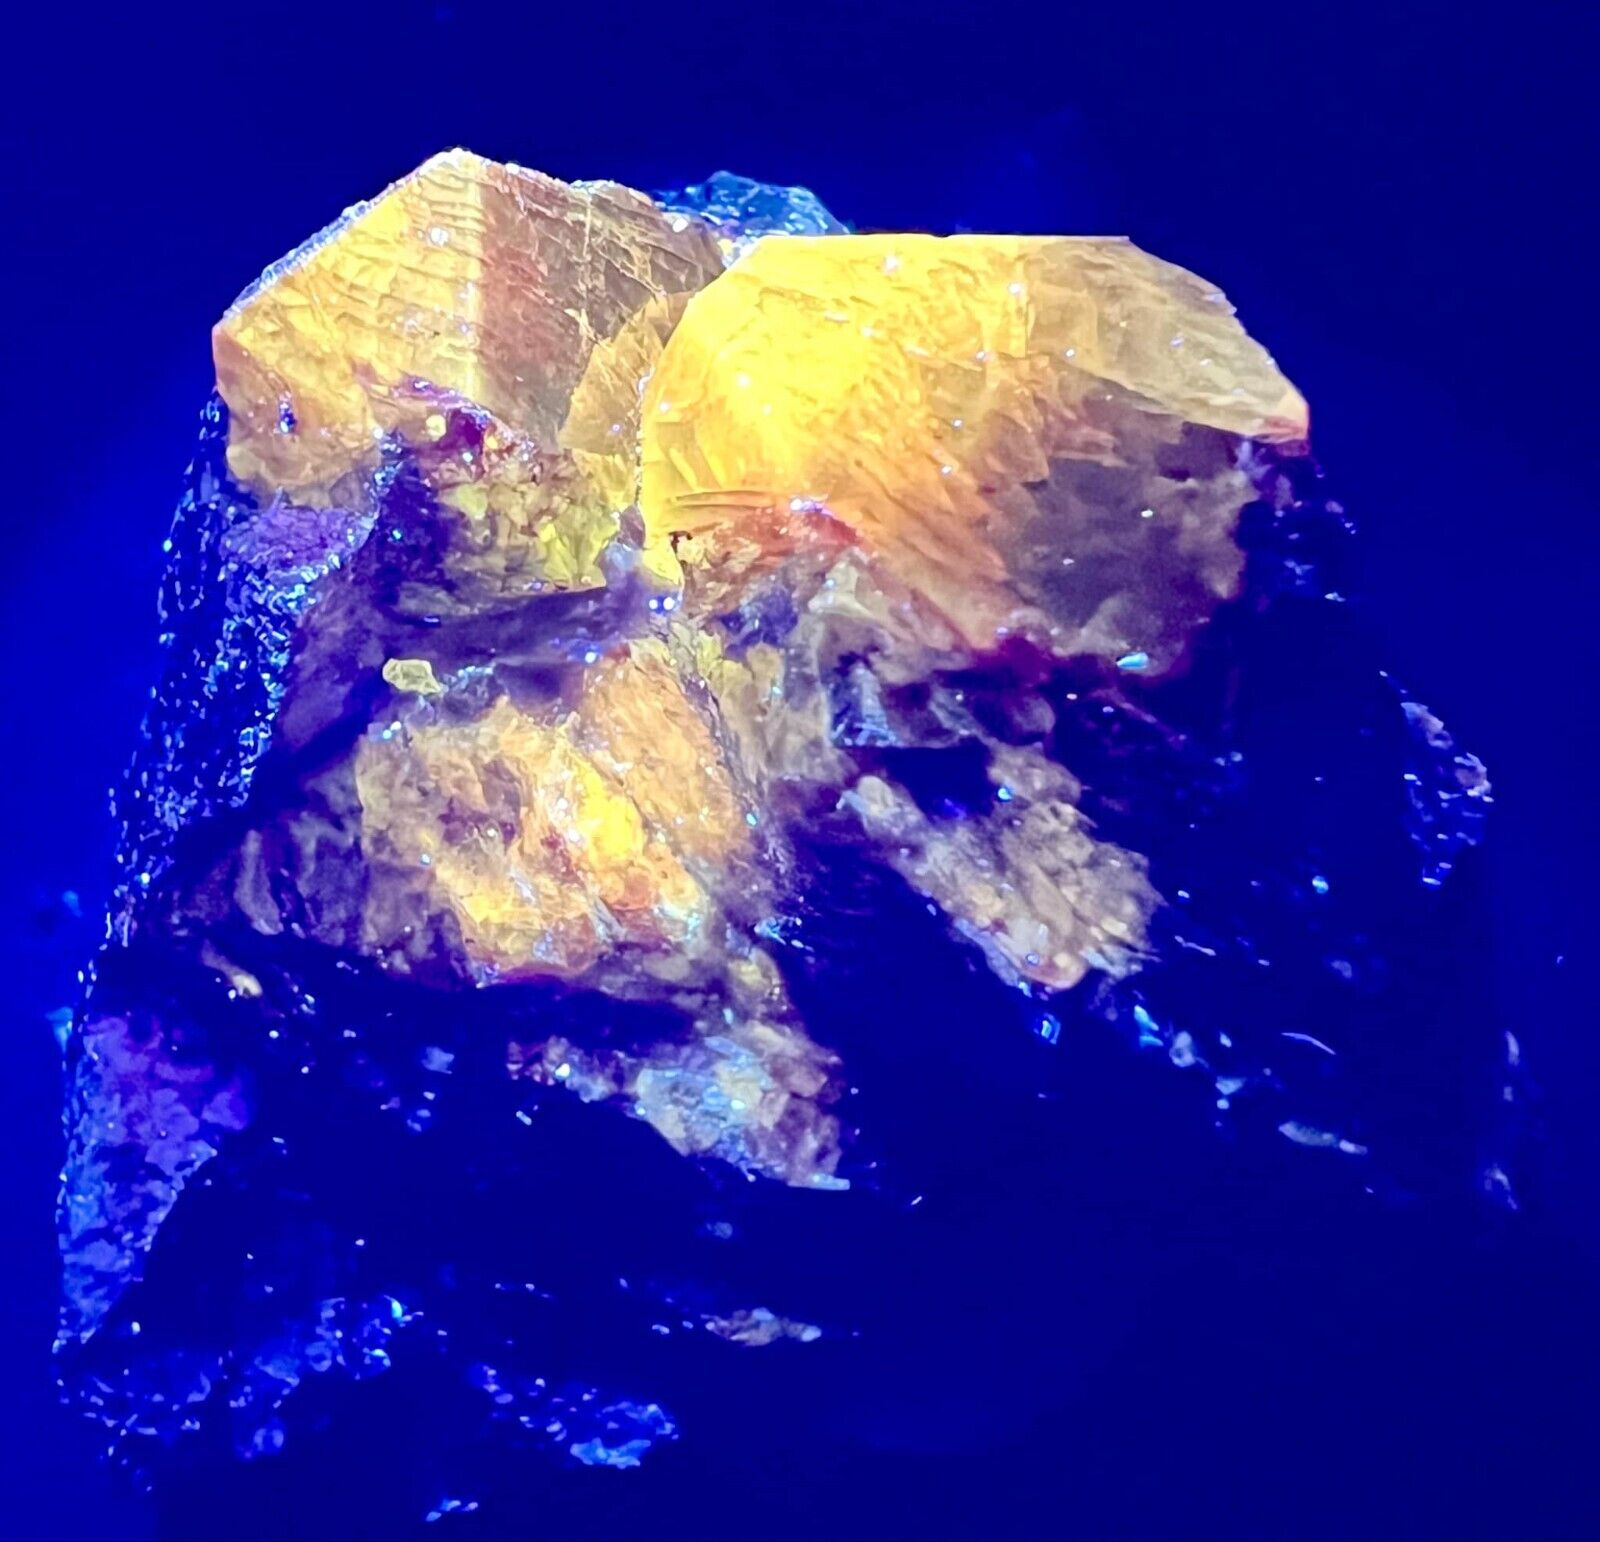 272 Carat Amazing Fluorescent Red Zircon Twin Crystal From Skardu, Pakistan